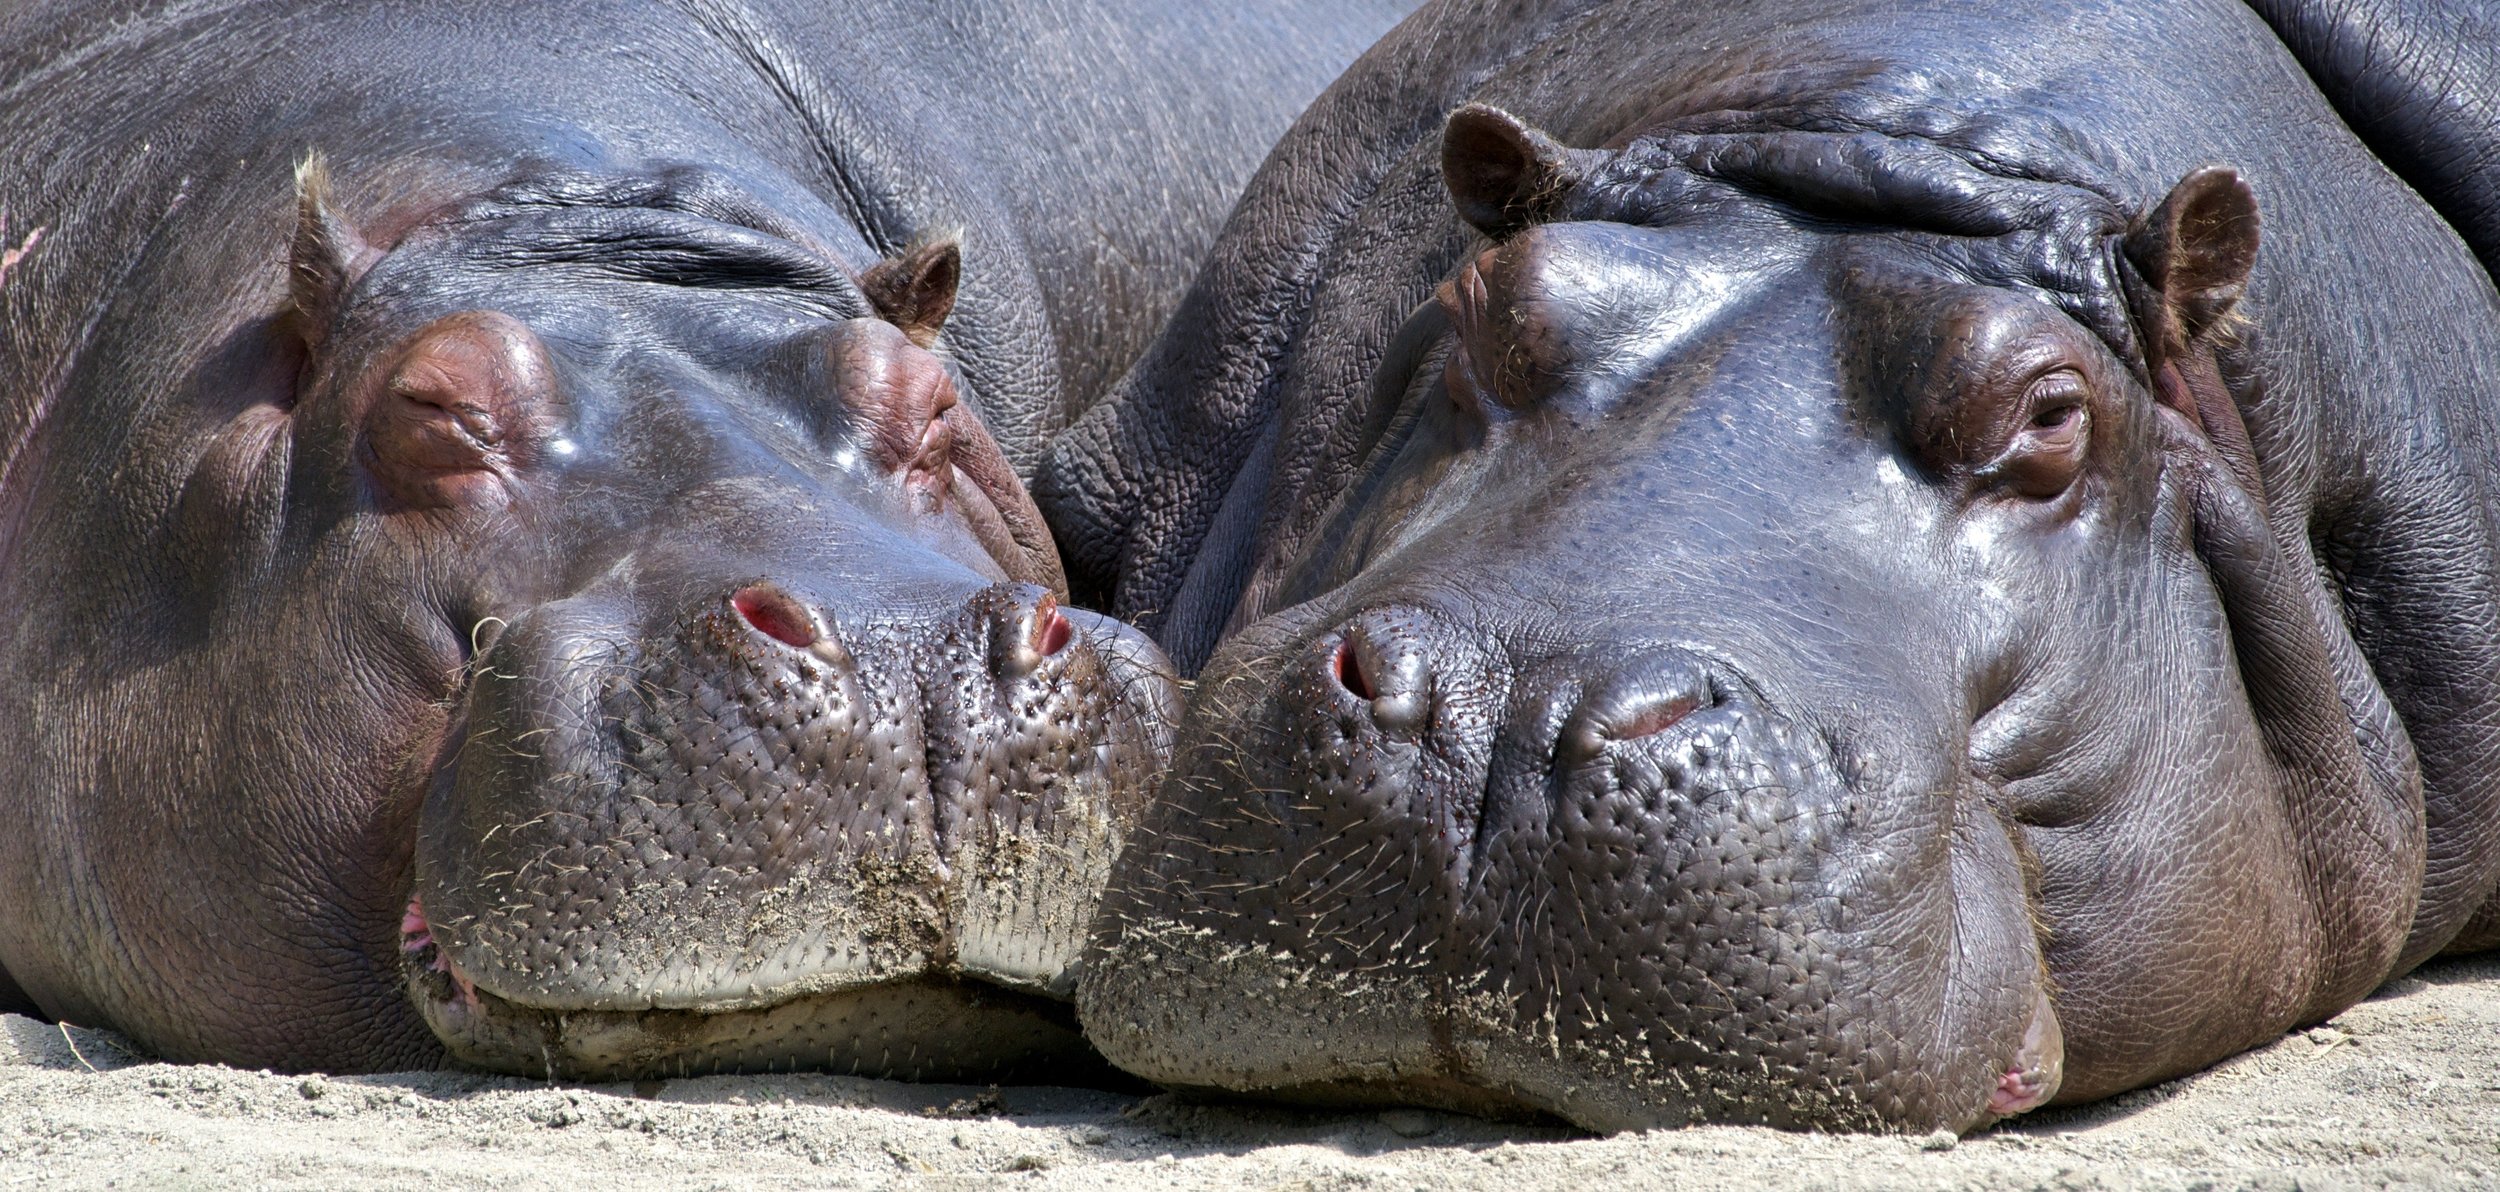 animals-close-up-hippopotamuses-35995.jpg